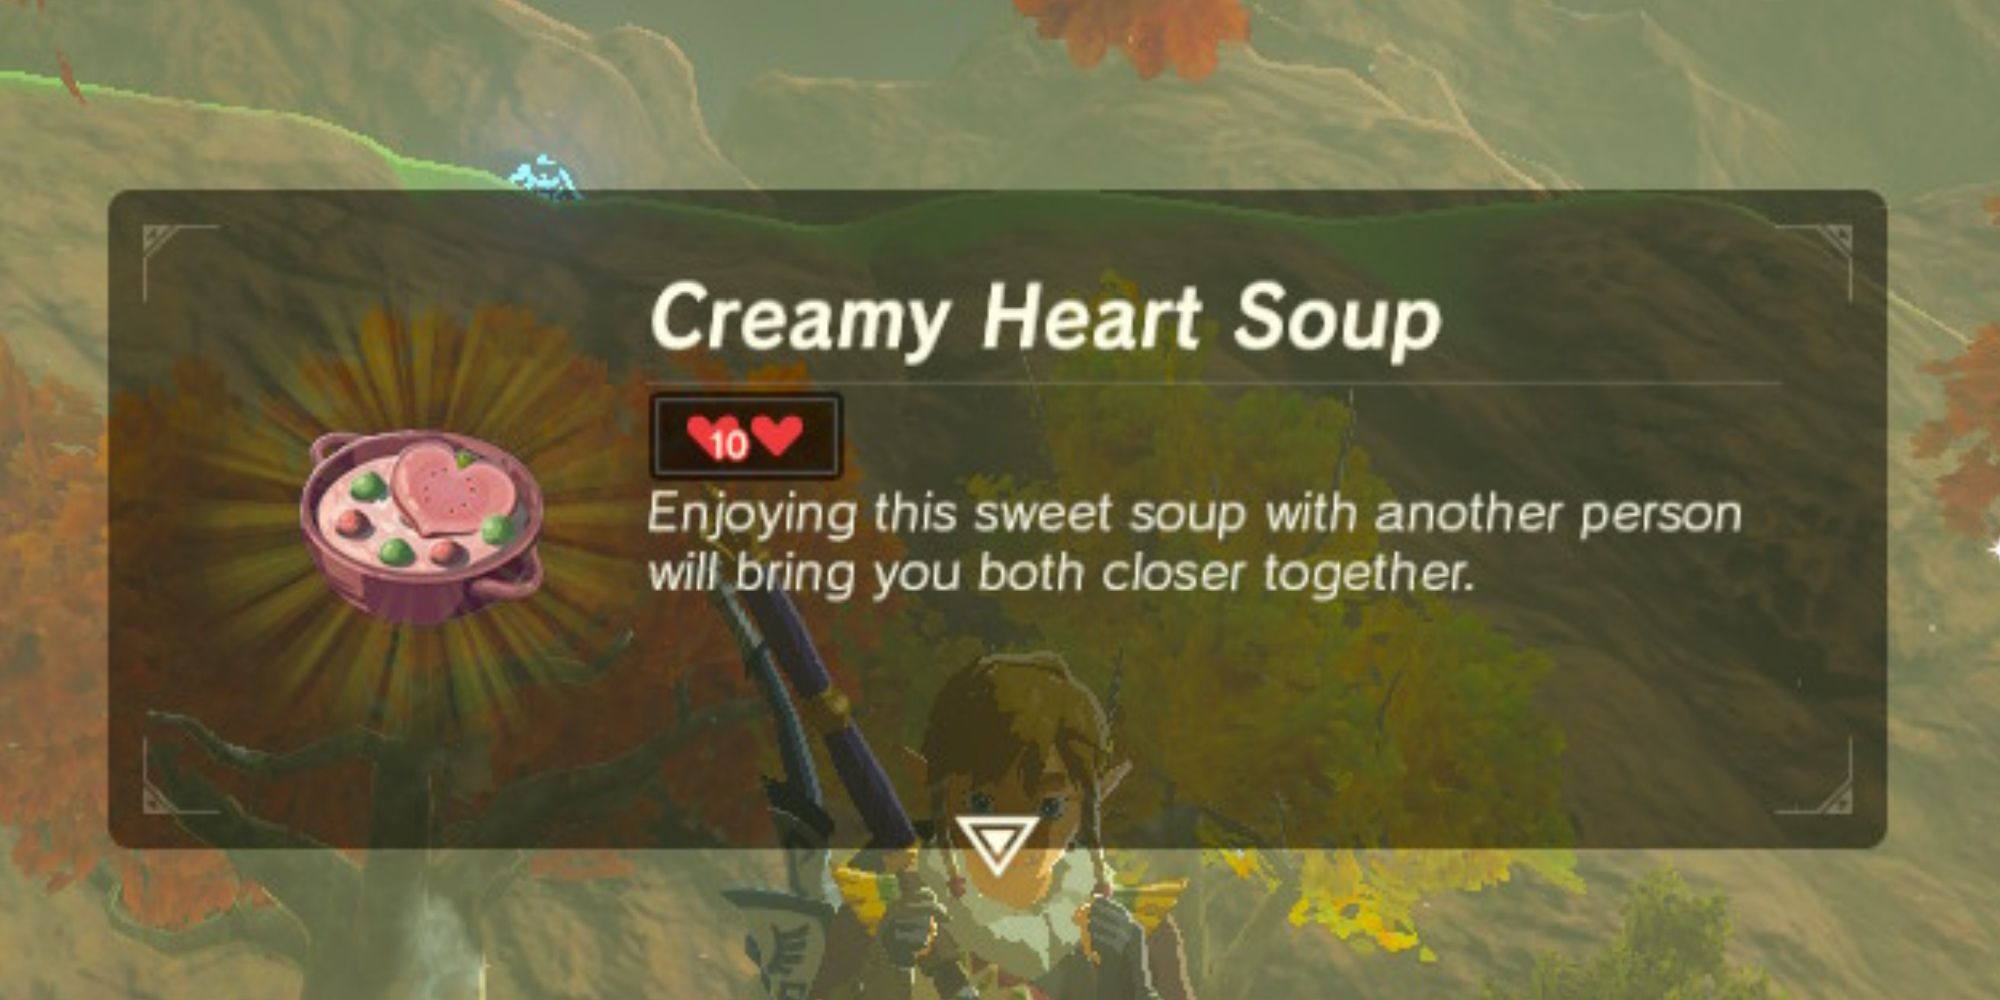 Creamy Heart Soup Description from The Legend of Zelda: Breath of The Wild